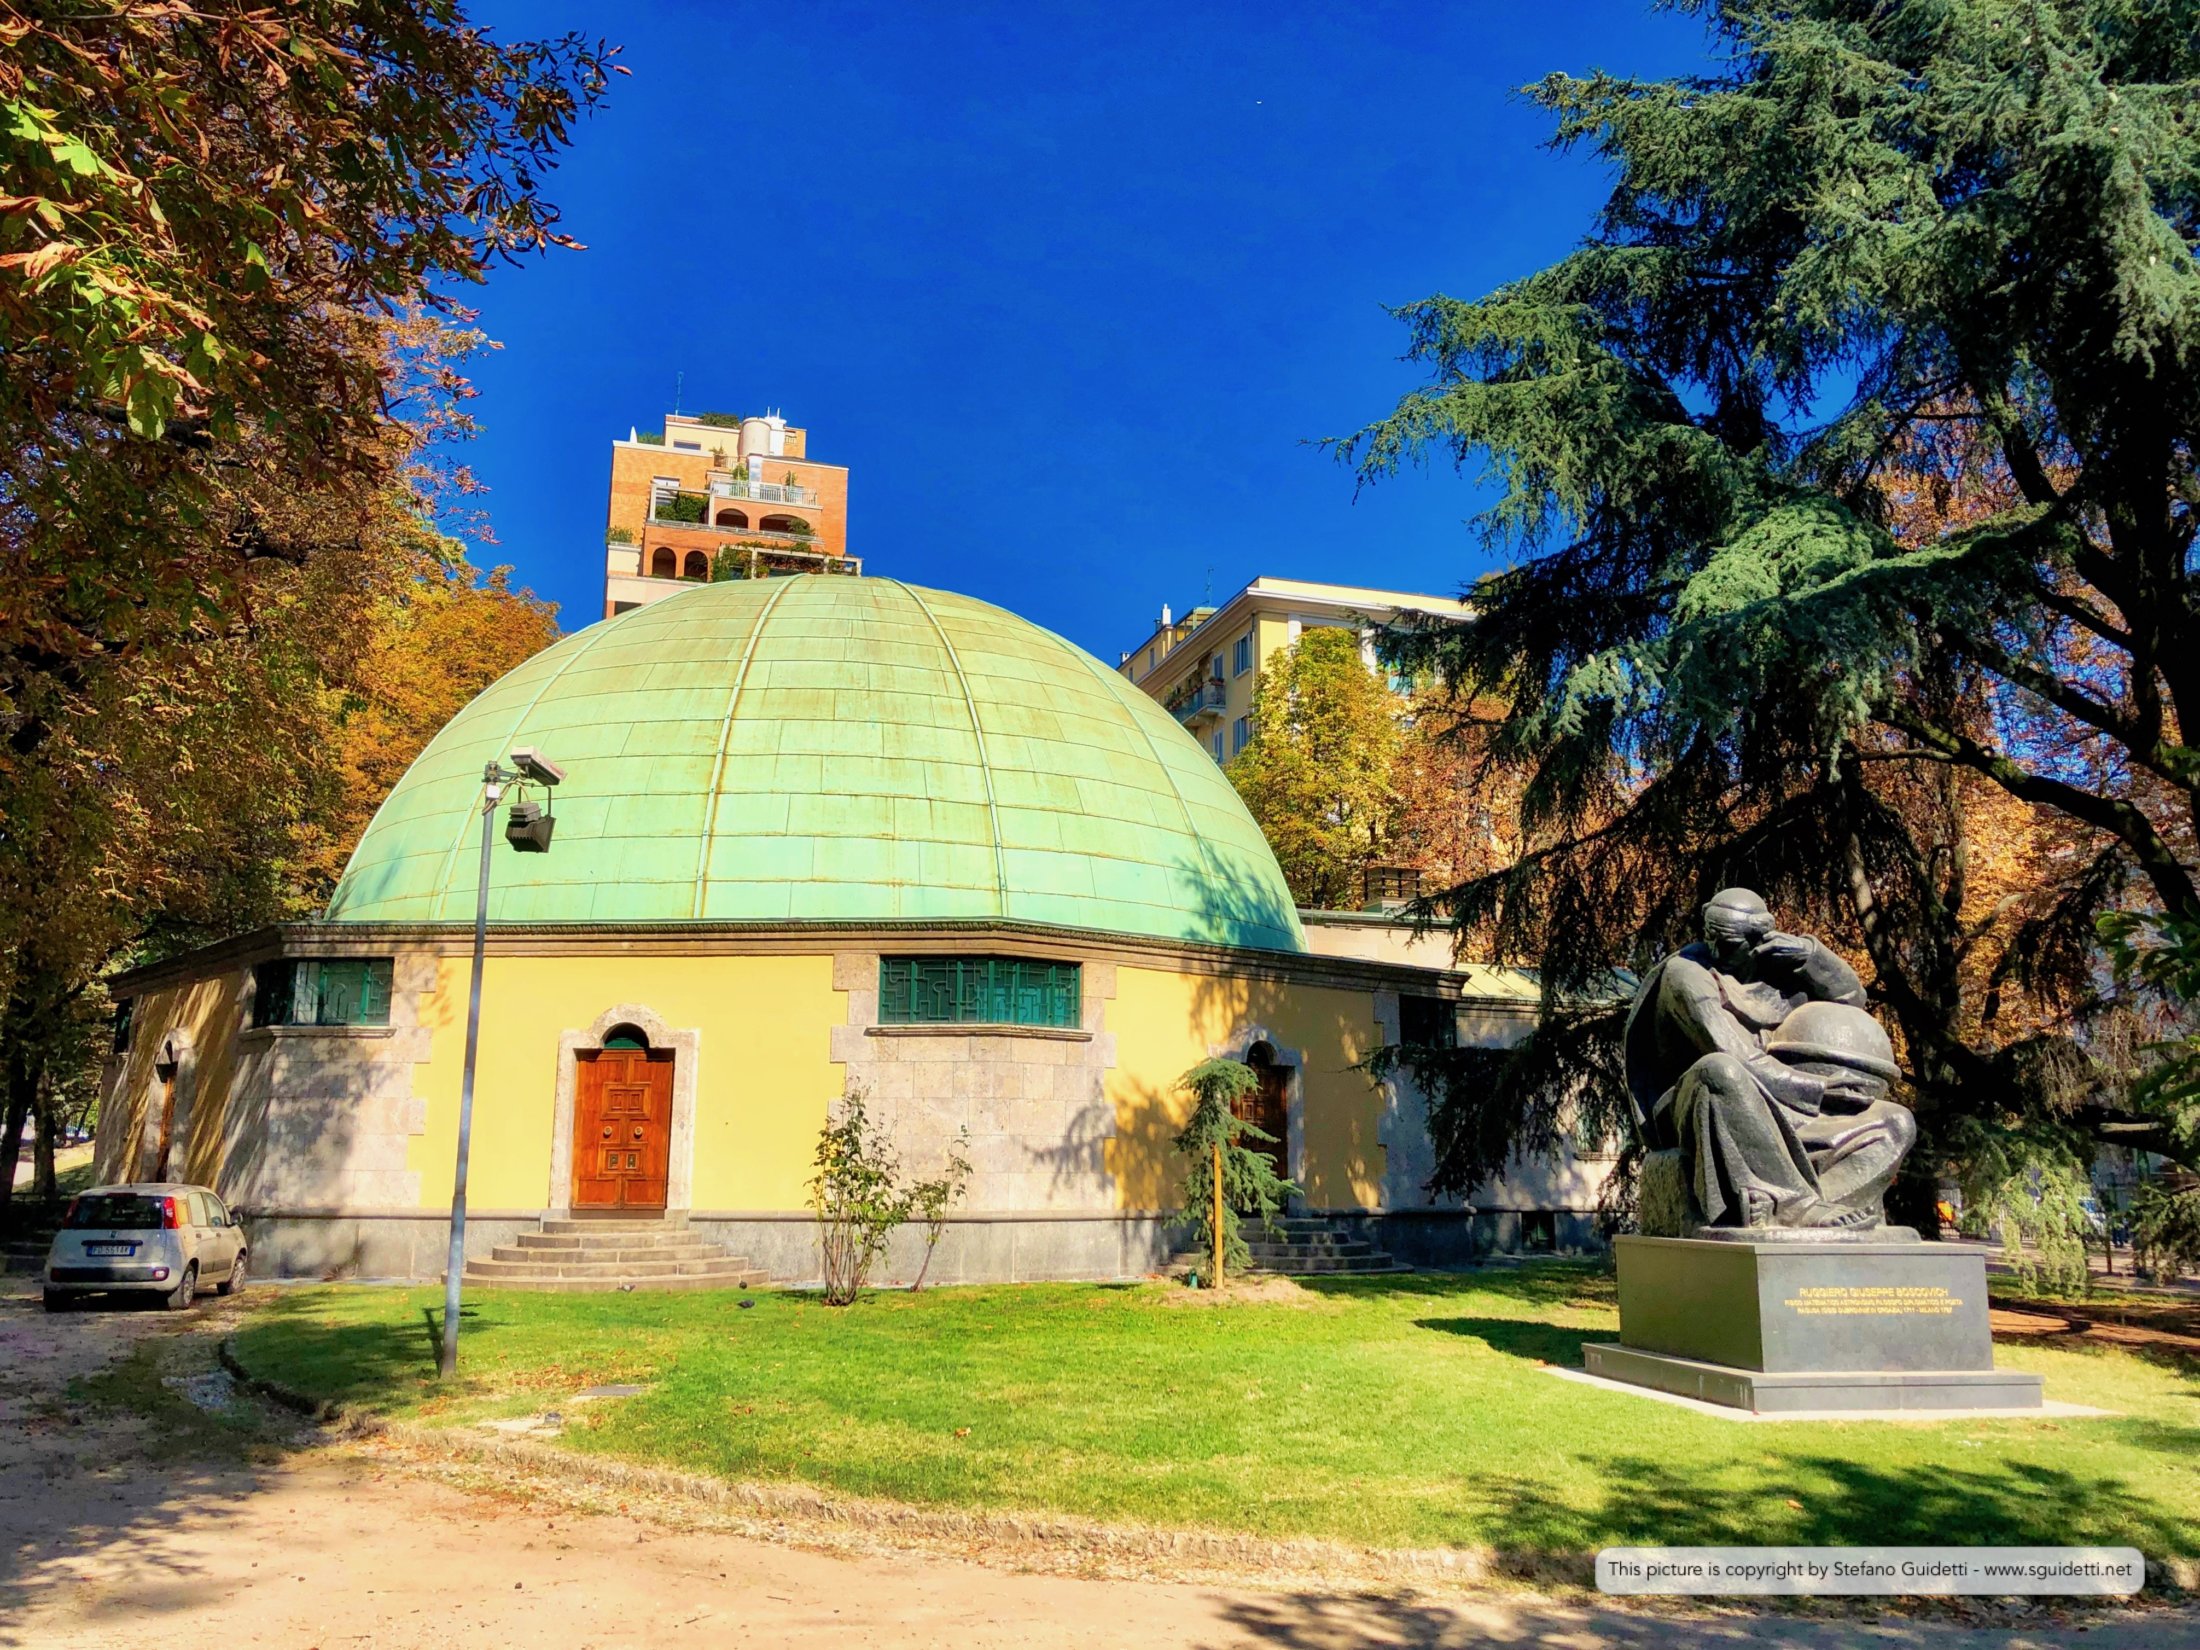 Civico Planetario Ulrico Hoepli